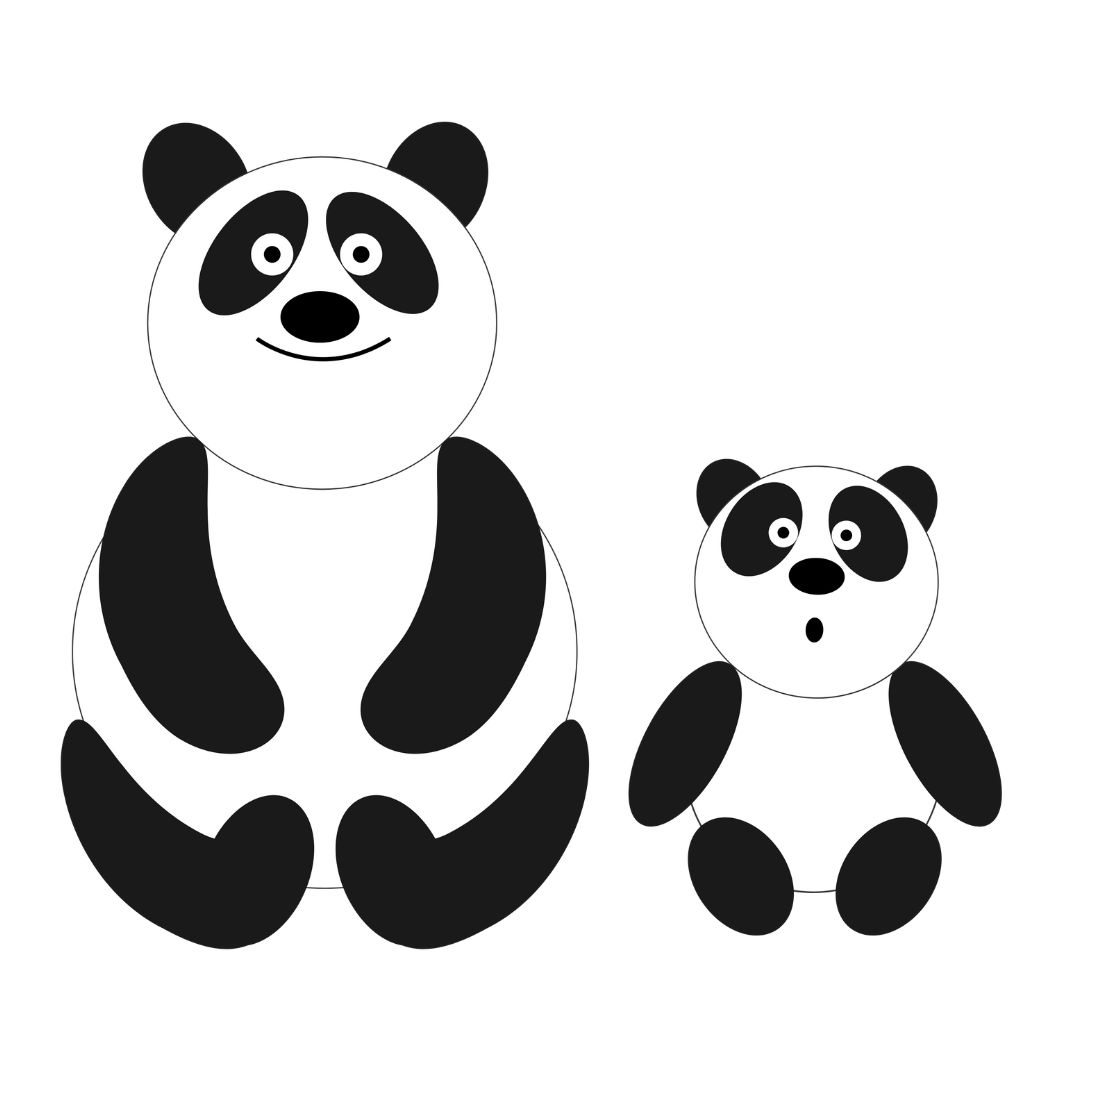 Two funny pandas.